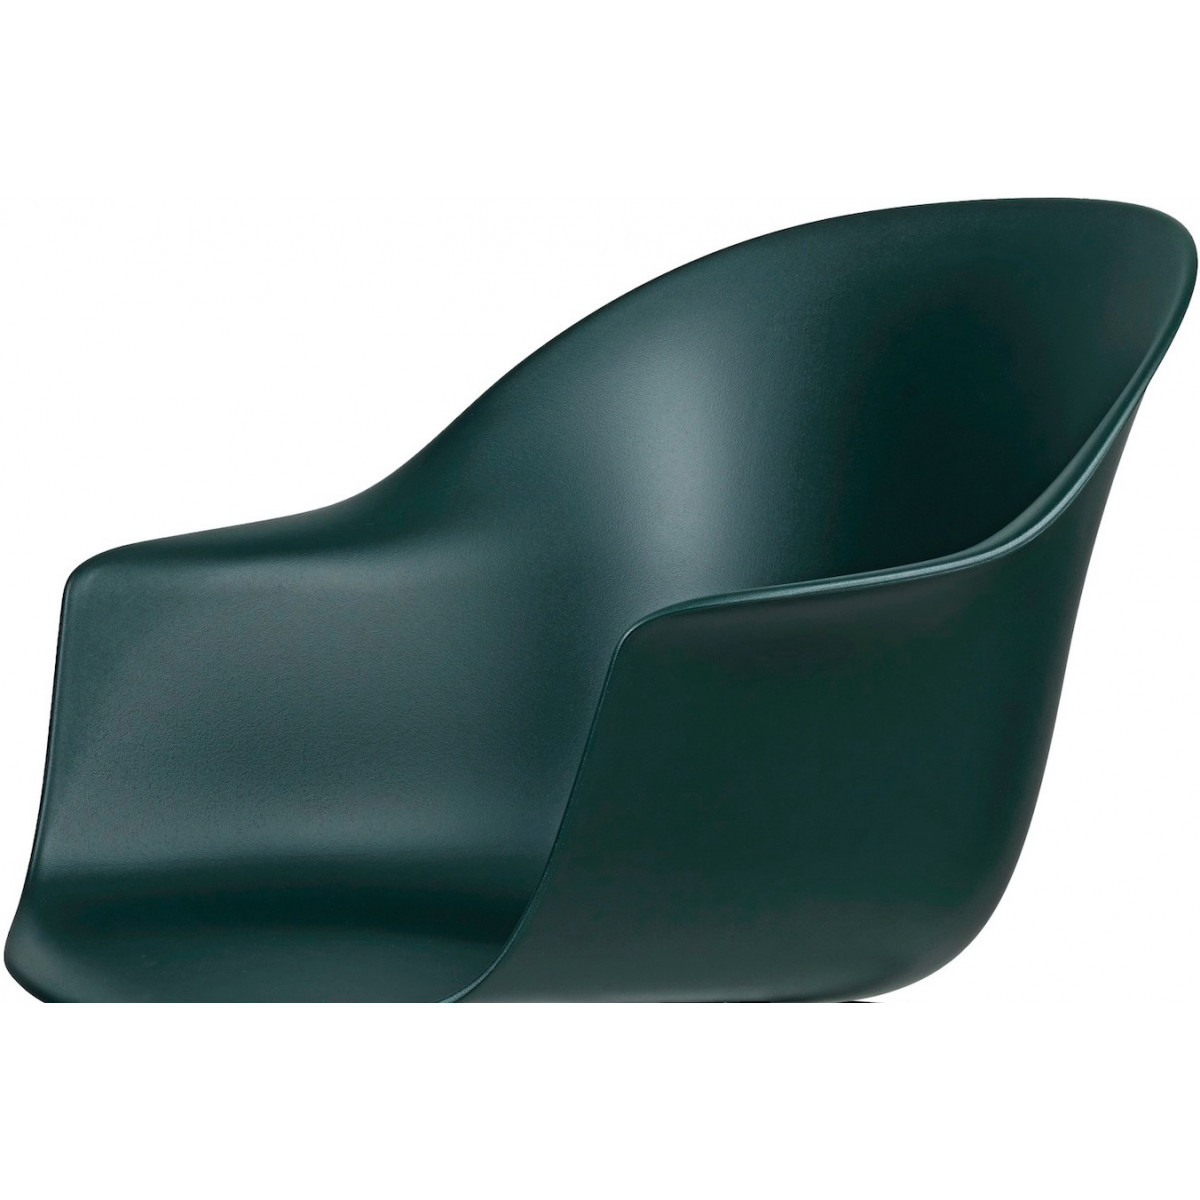 Bat Meeting chair, Height Adjustable – Without castors – Dark green shell